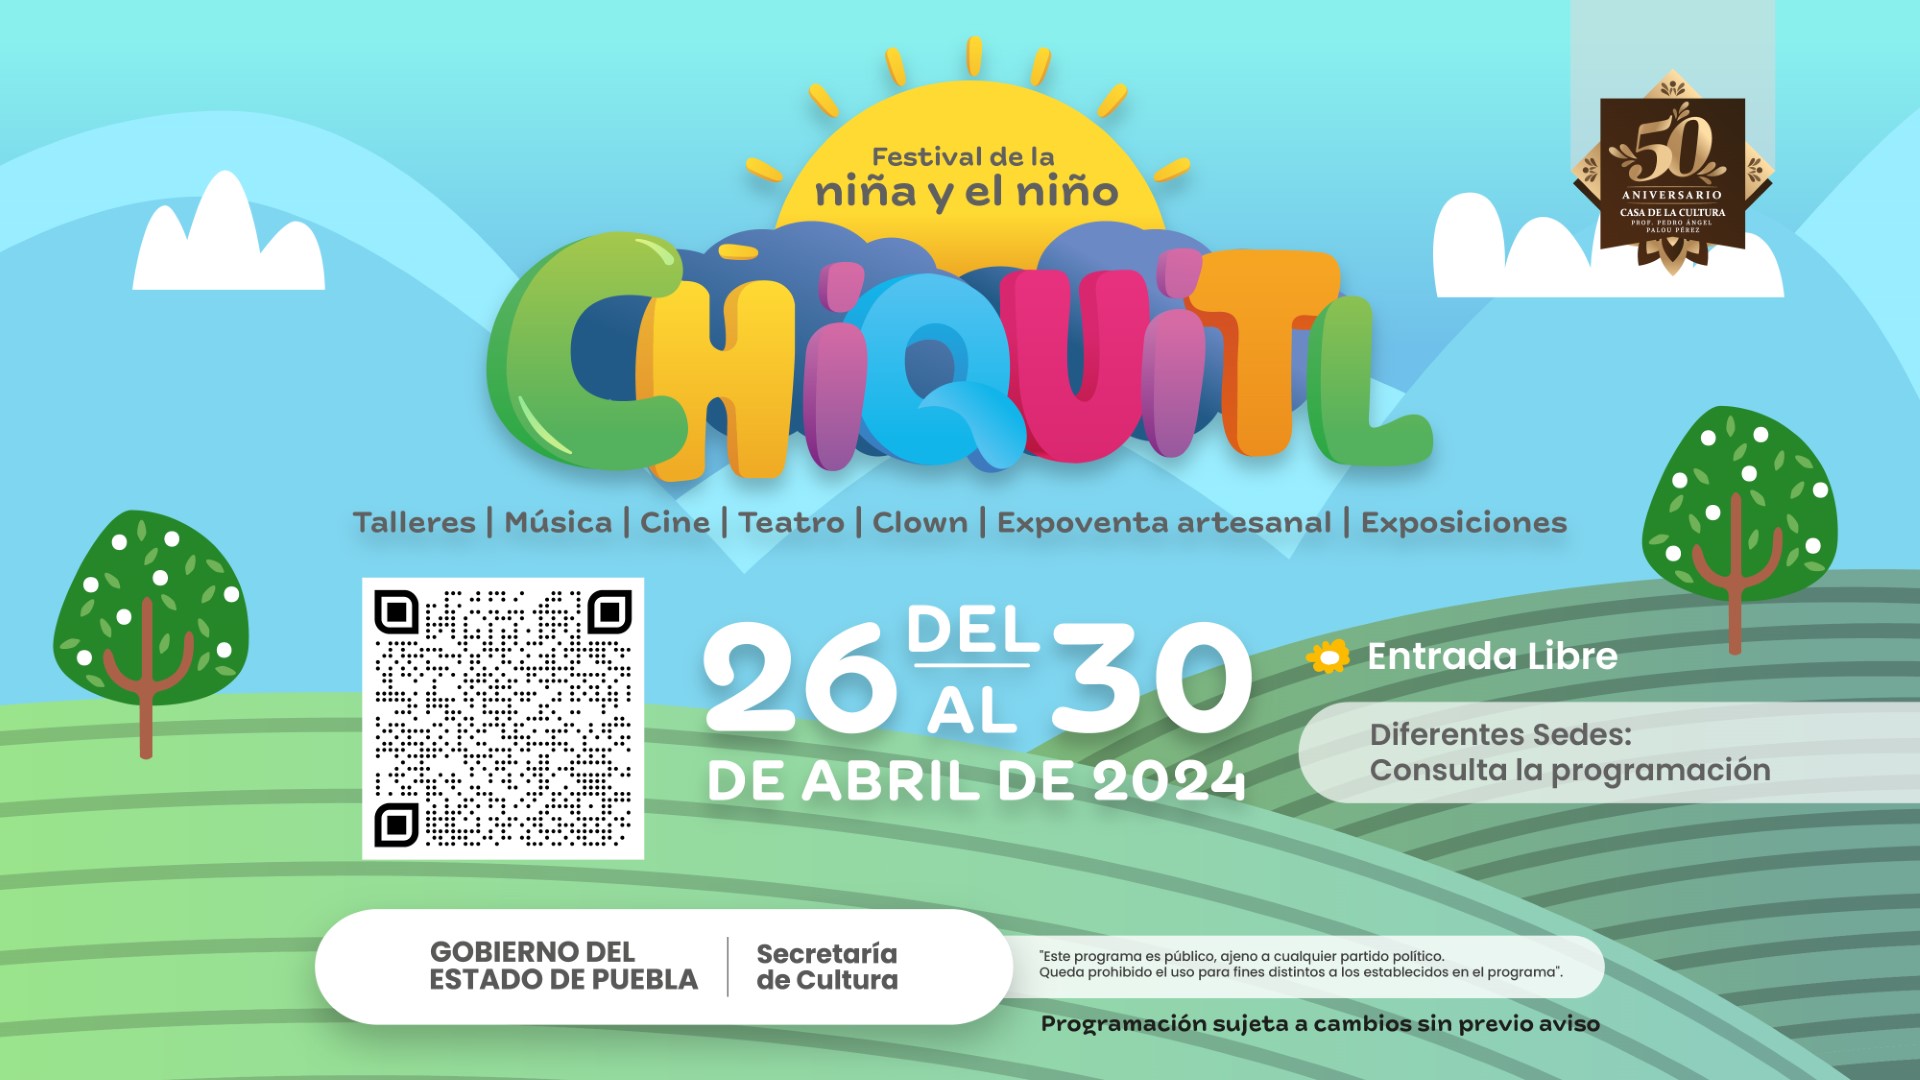 Festival “Chiquitl 2024” tendrá más de 20 actividades infantiles